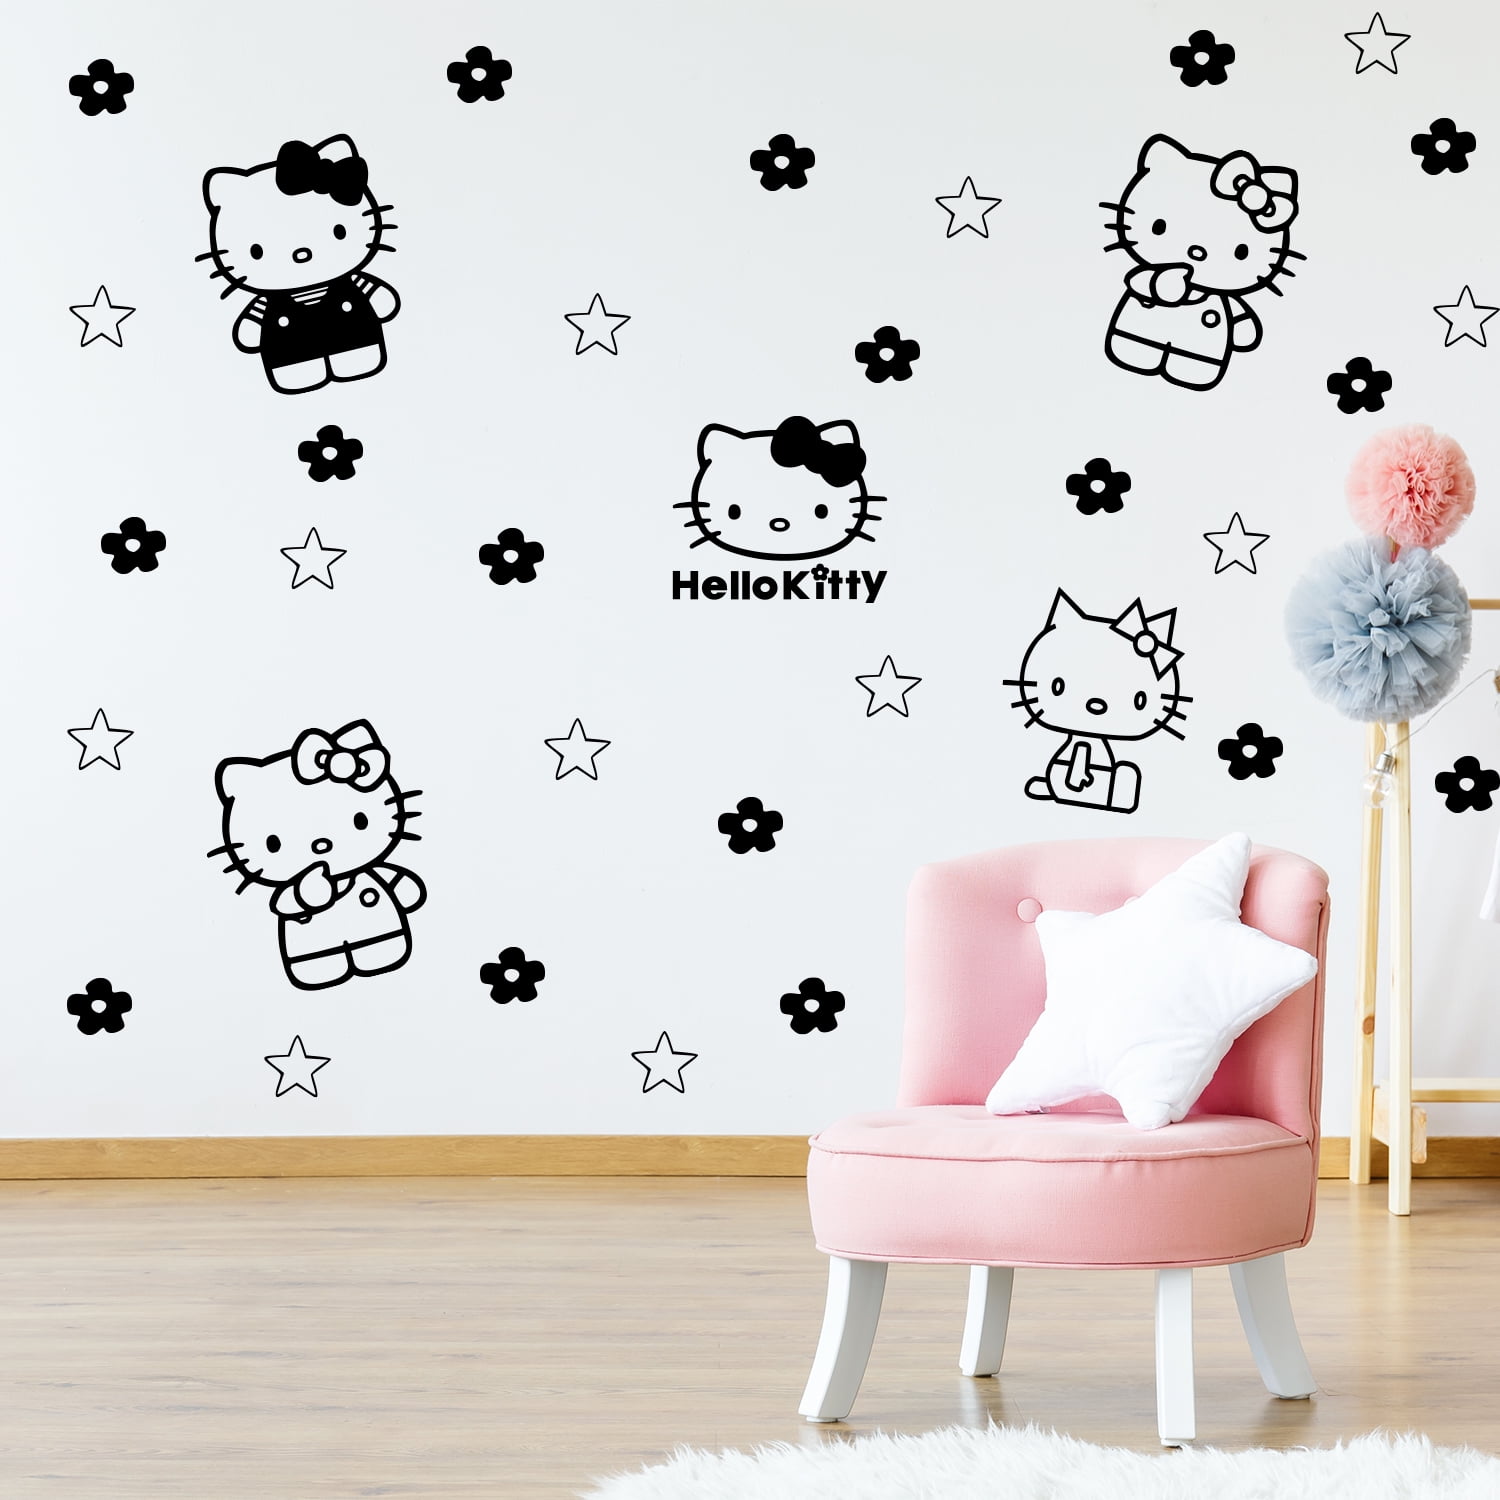 Hello Kitty Inspired Wall Decal Sticker Art